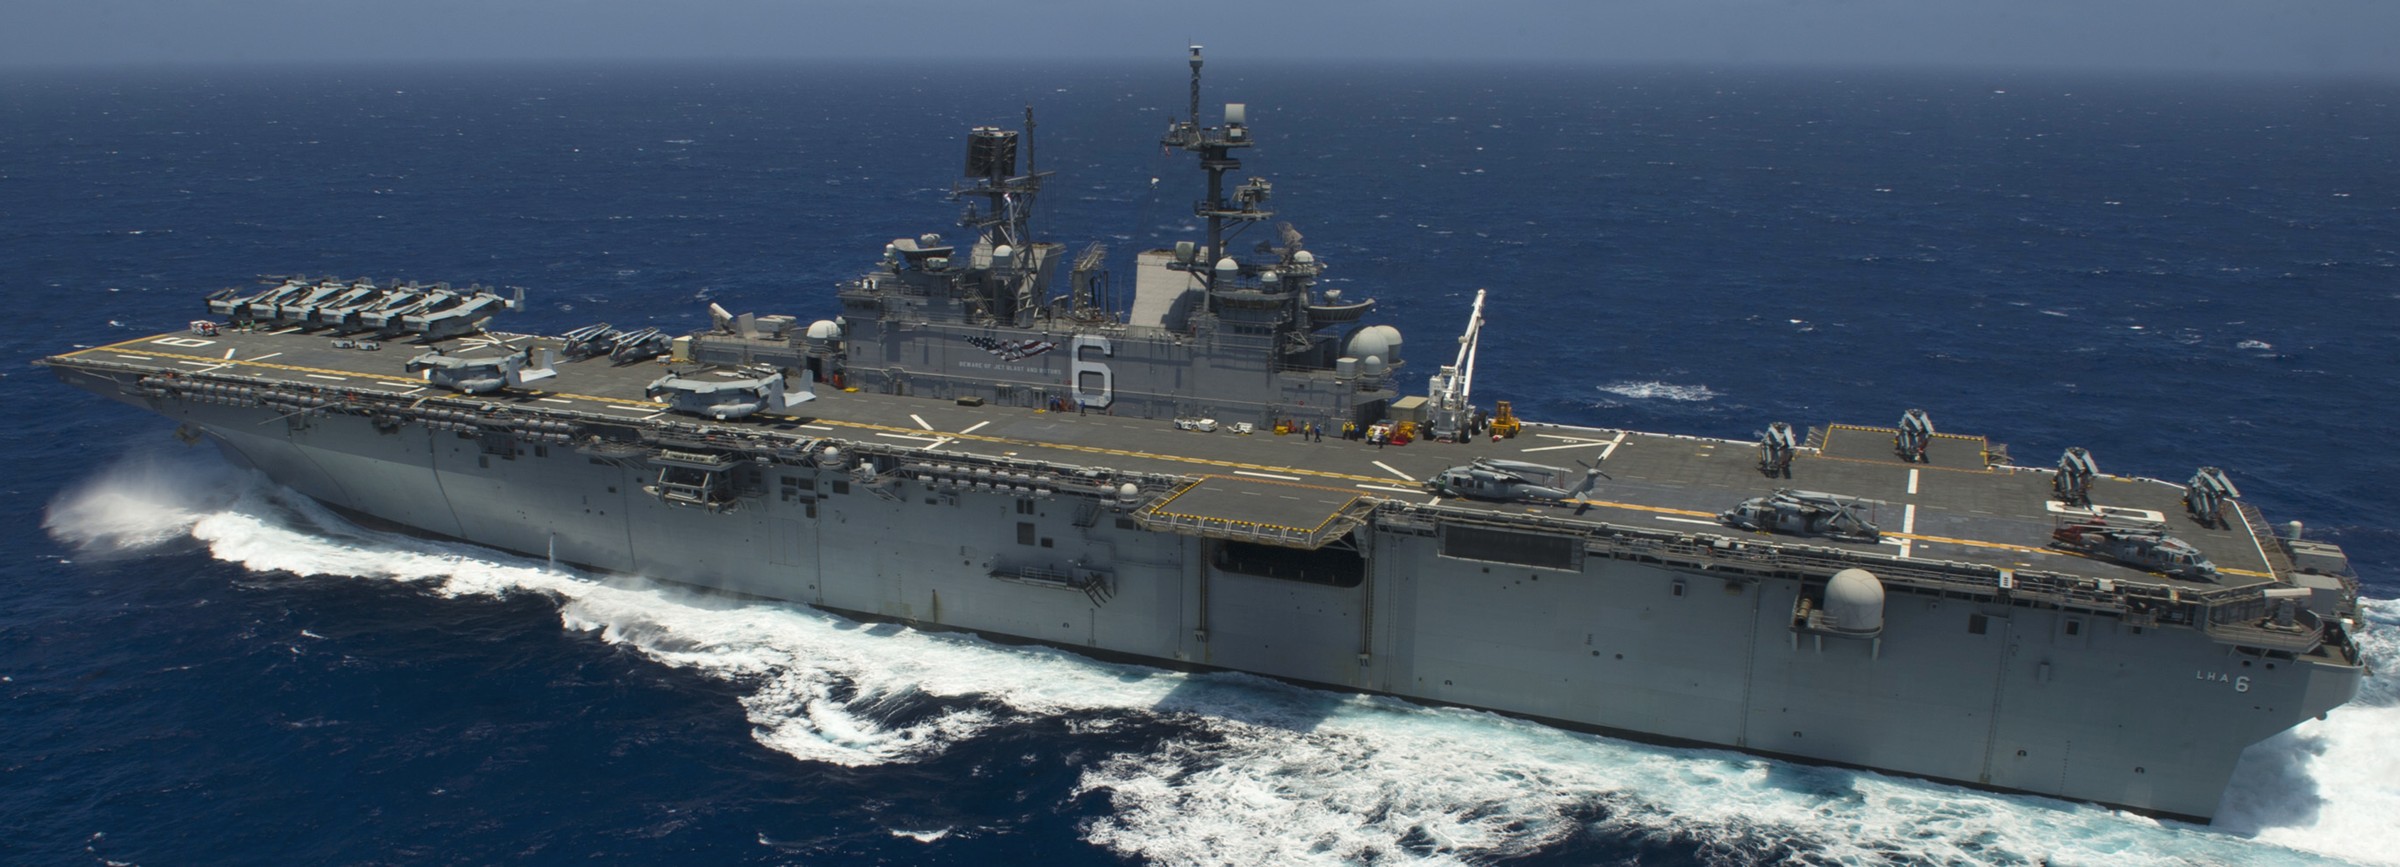 lha-6 uss america amphibious assault ship us navy 92